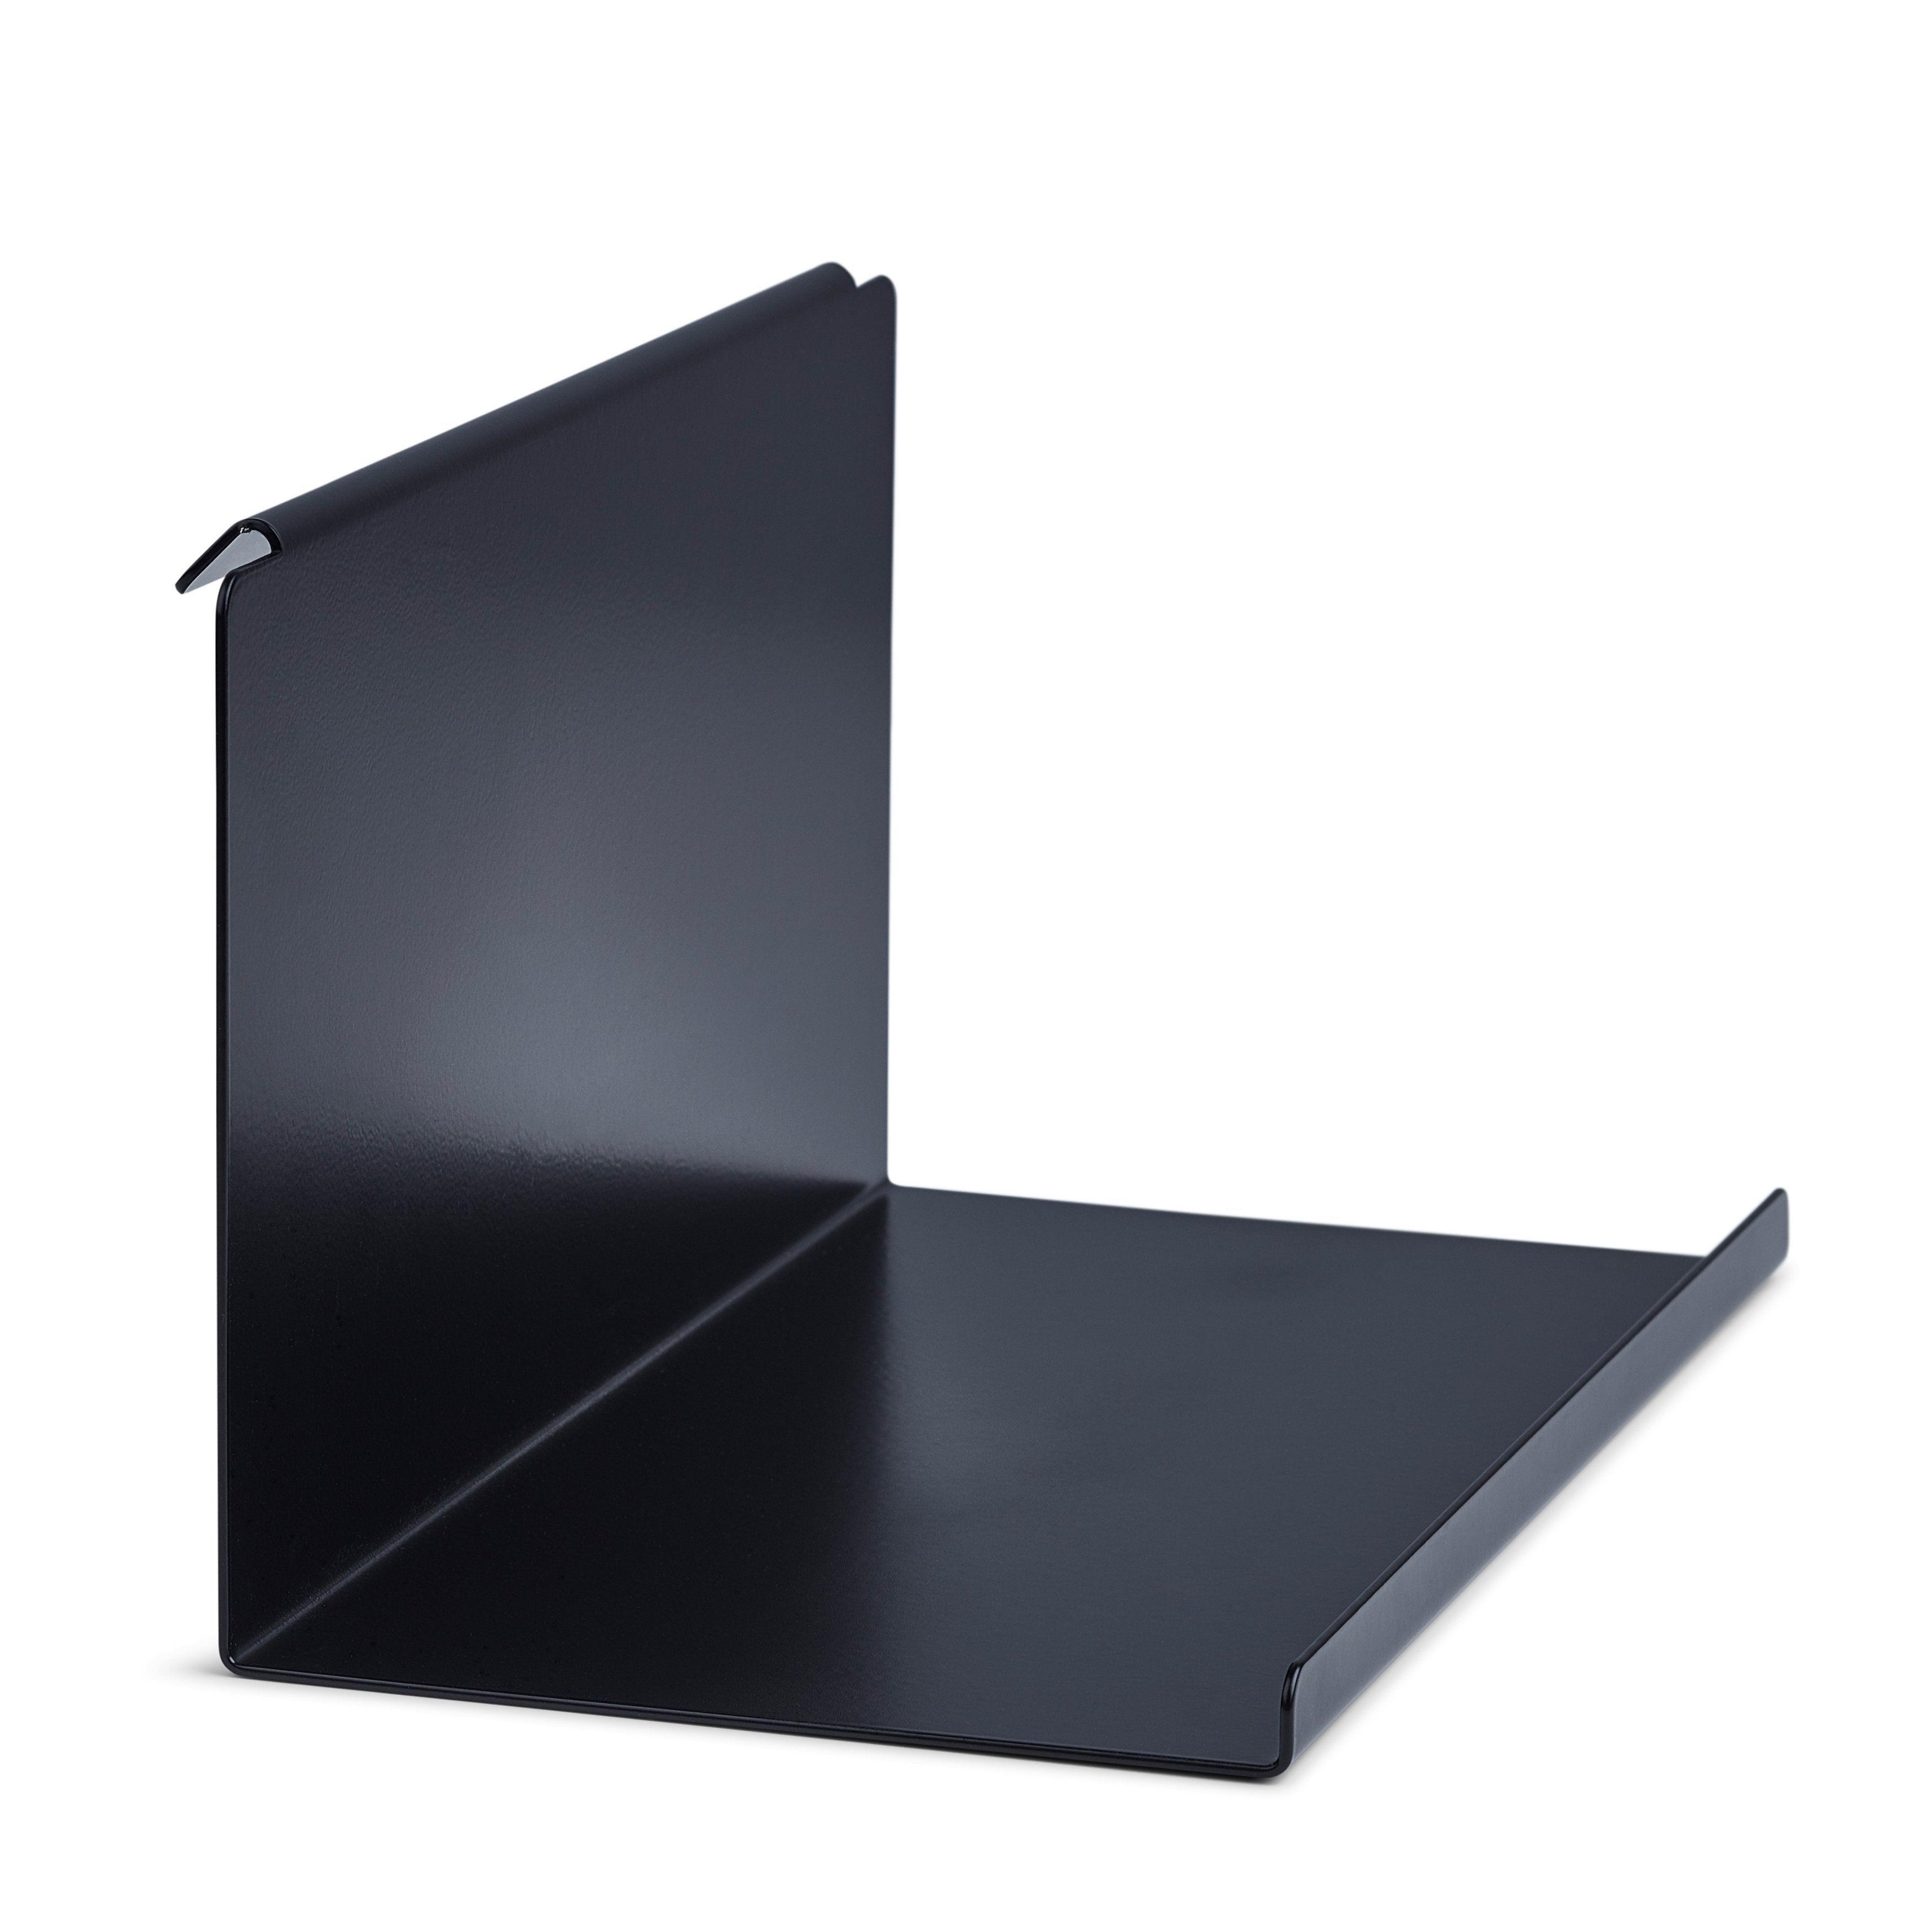 Gejst flex hylle sidebord svart, 13cm